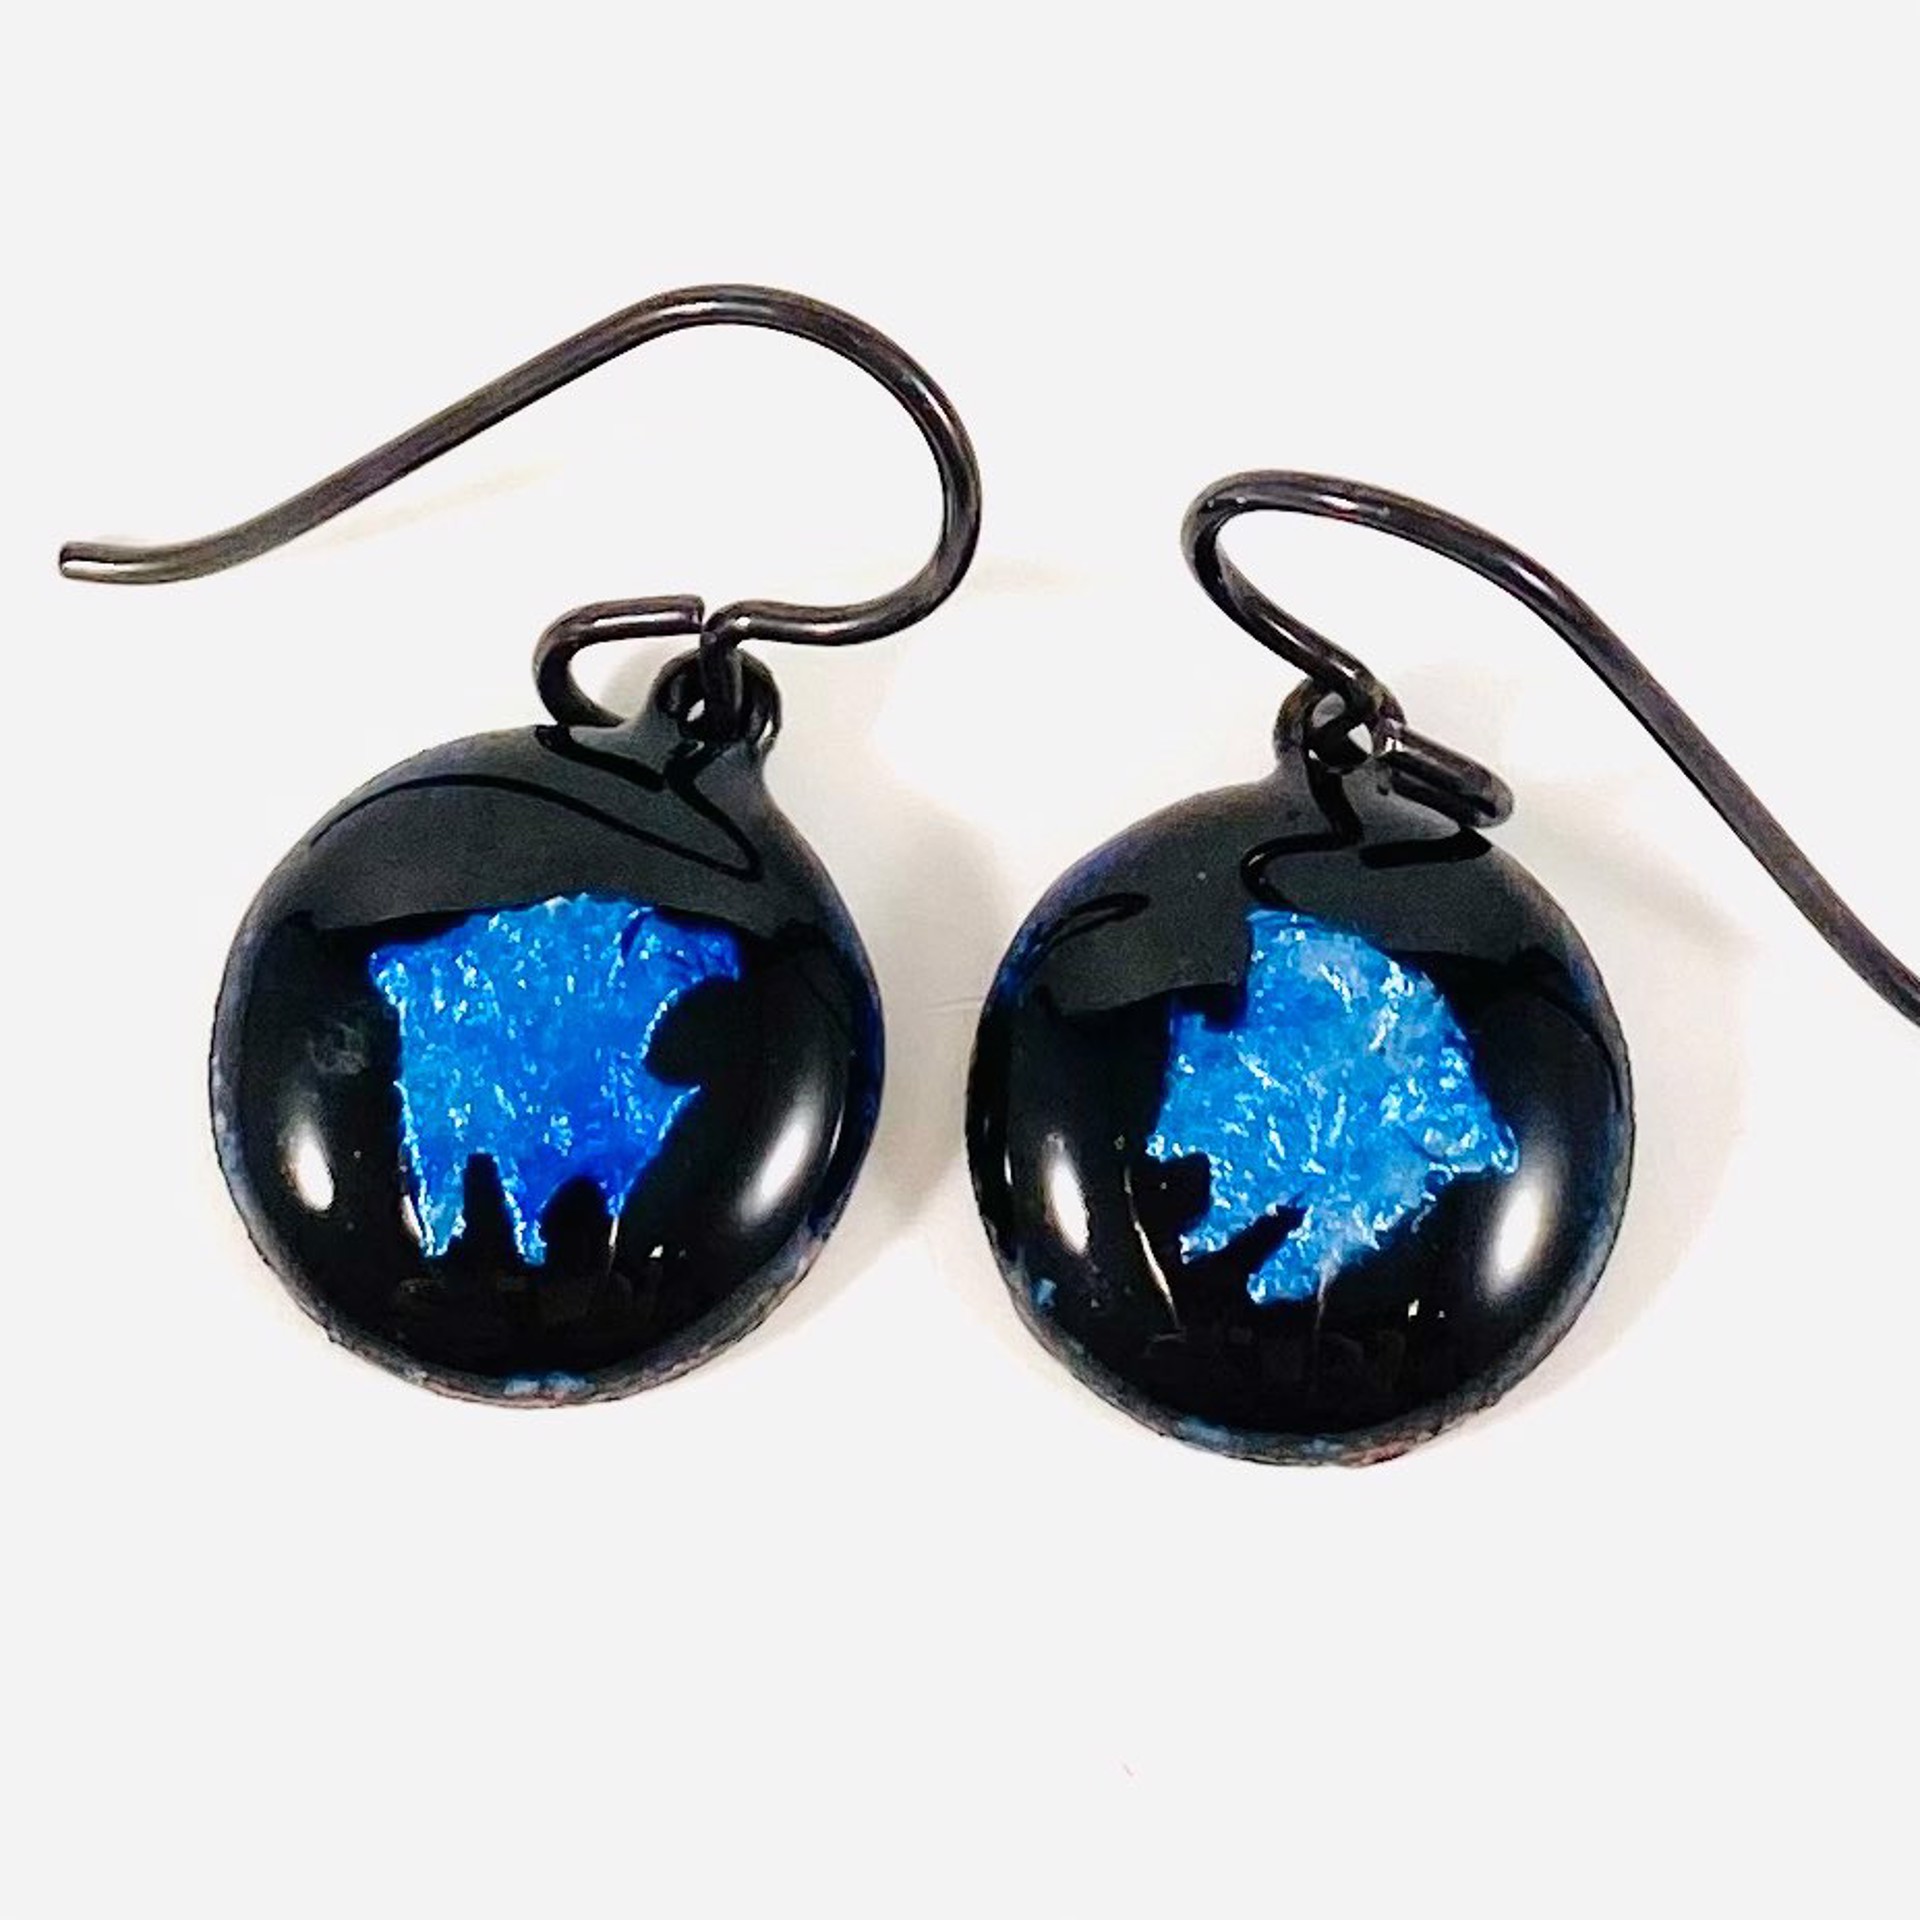 Blue Fish on Black Vitreous Enamel Earrings by Karen Hakim